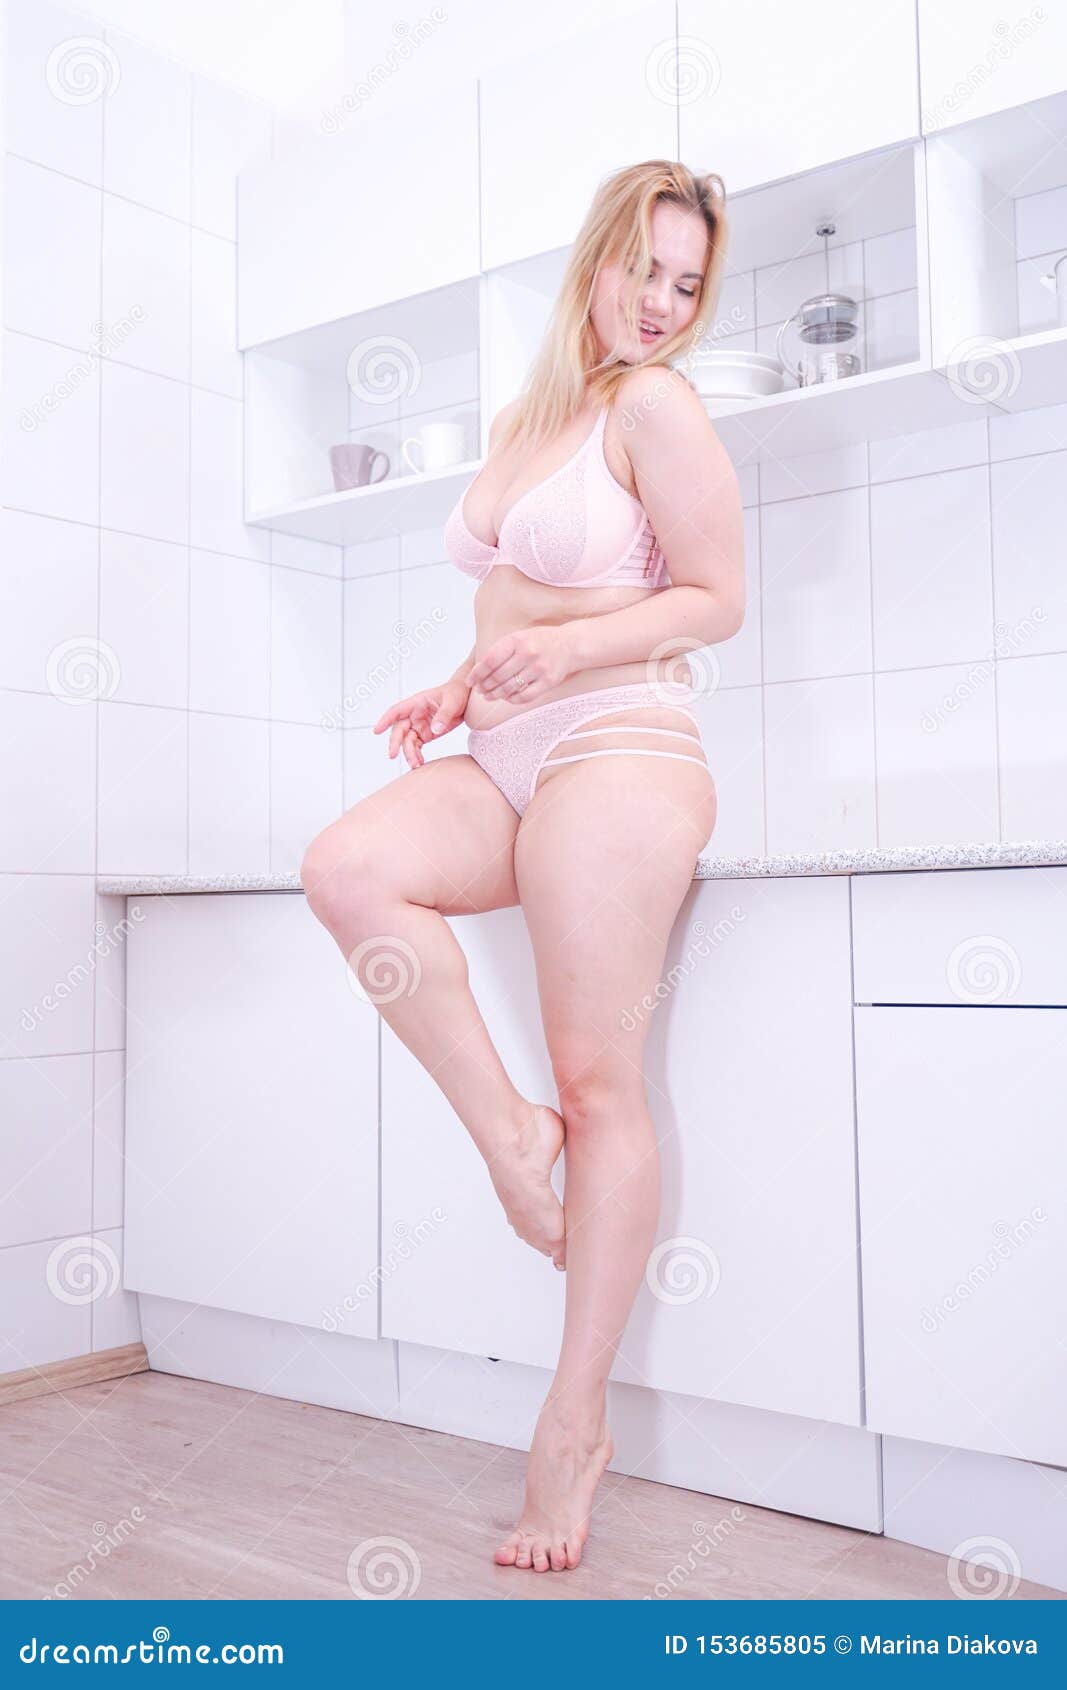 https://thumbs.dreamstime.com/z/beauty-blonde-caucasian-girl-chubby-body-pink-lingerie-white-kitchen-home-pretty-plus-size-female-big-xxl-153685805.jpg